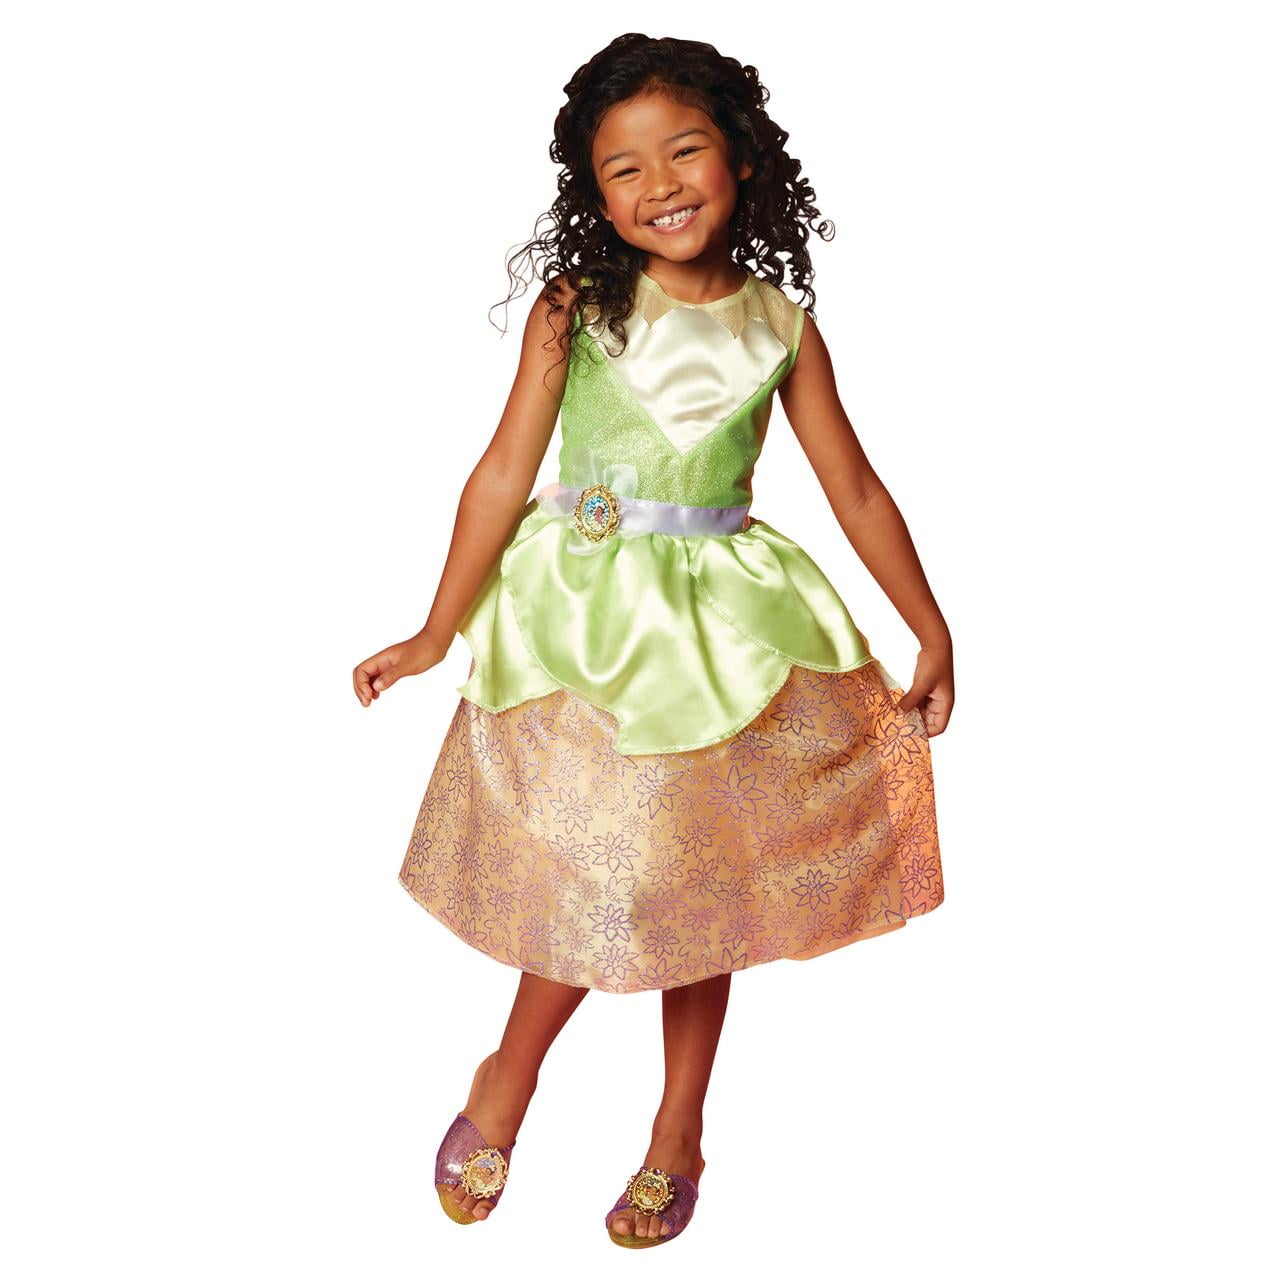 Toddler Girls Birthday Dress Party Princess Outfits Glittery Tutu Skirts Costume 